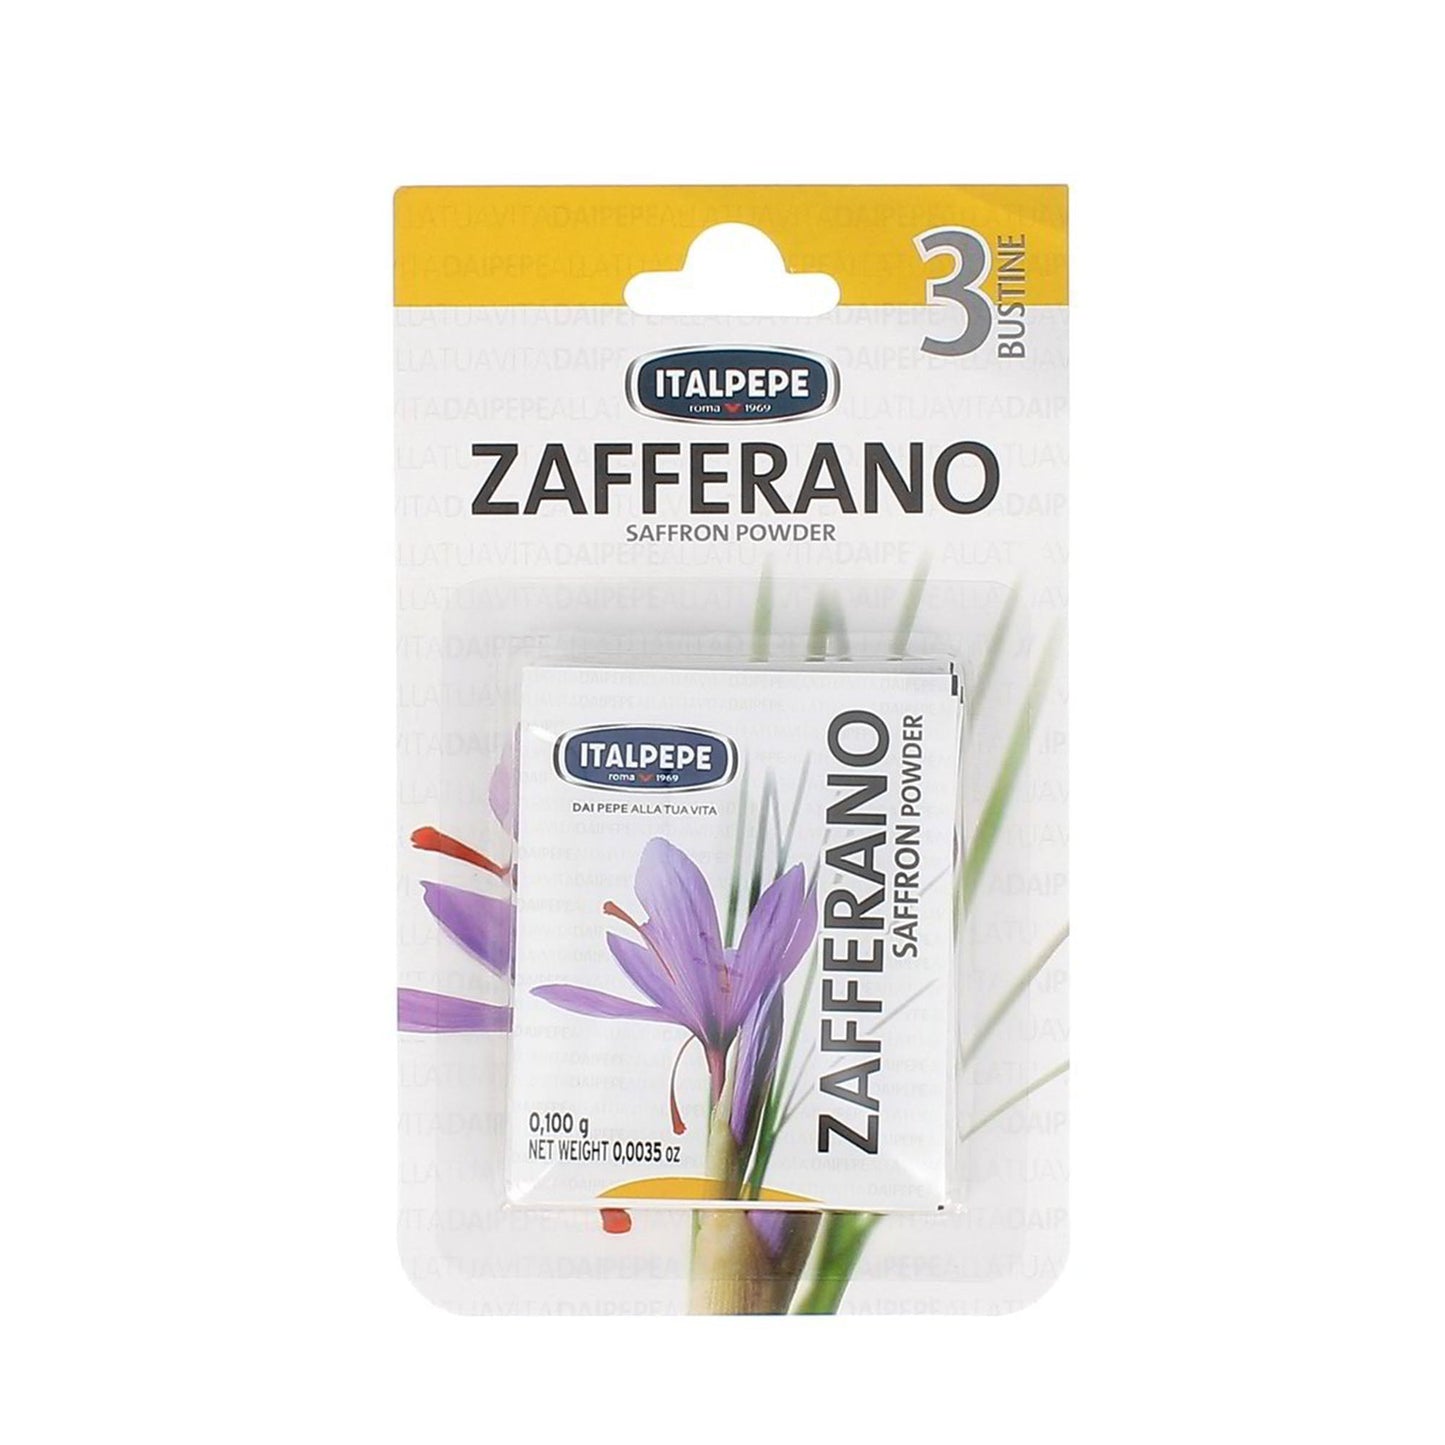 Italpepe Zafferano 3 Pack